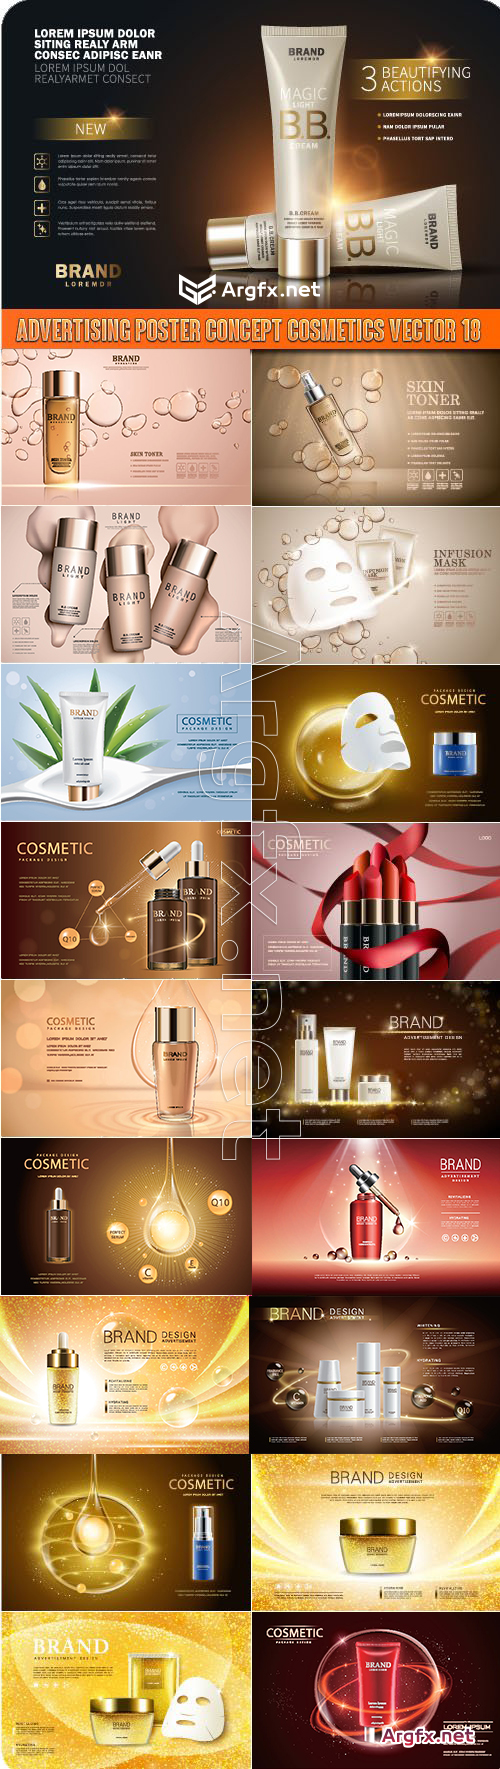 Advertising Poster Concept Cosmetics vector 18